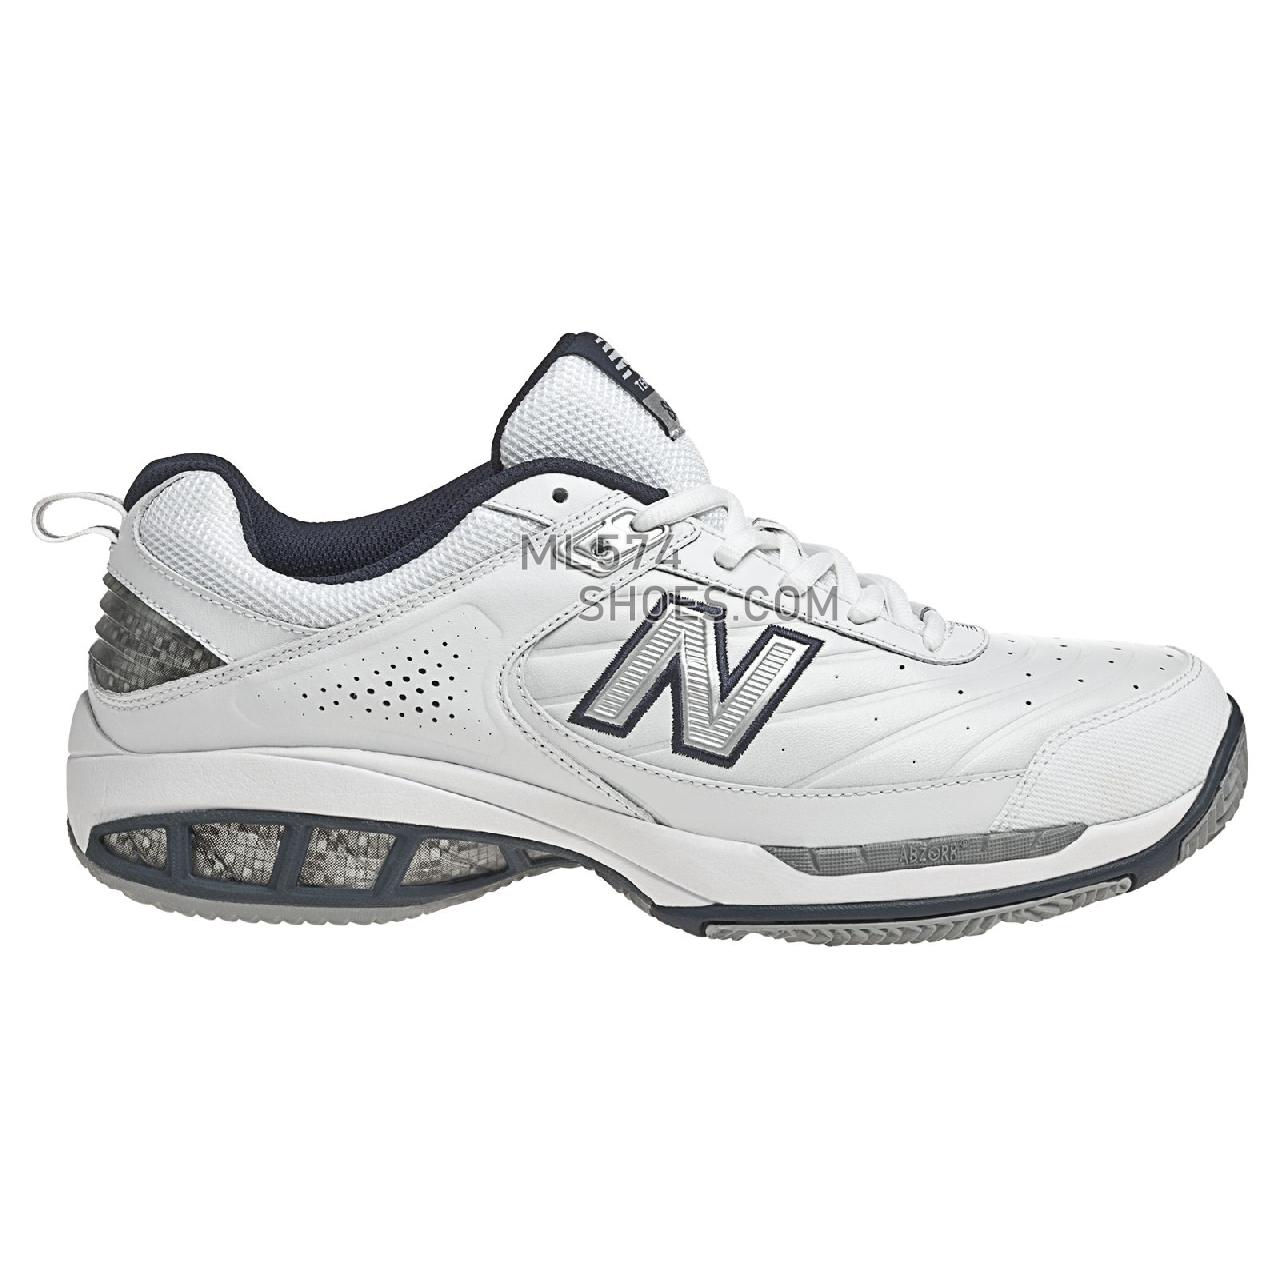 New Balance Court 806 - Men's 806 - Tennis / Court White with Navy - MC806W